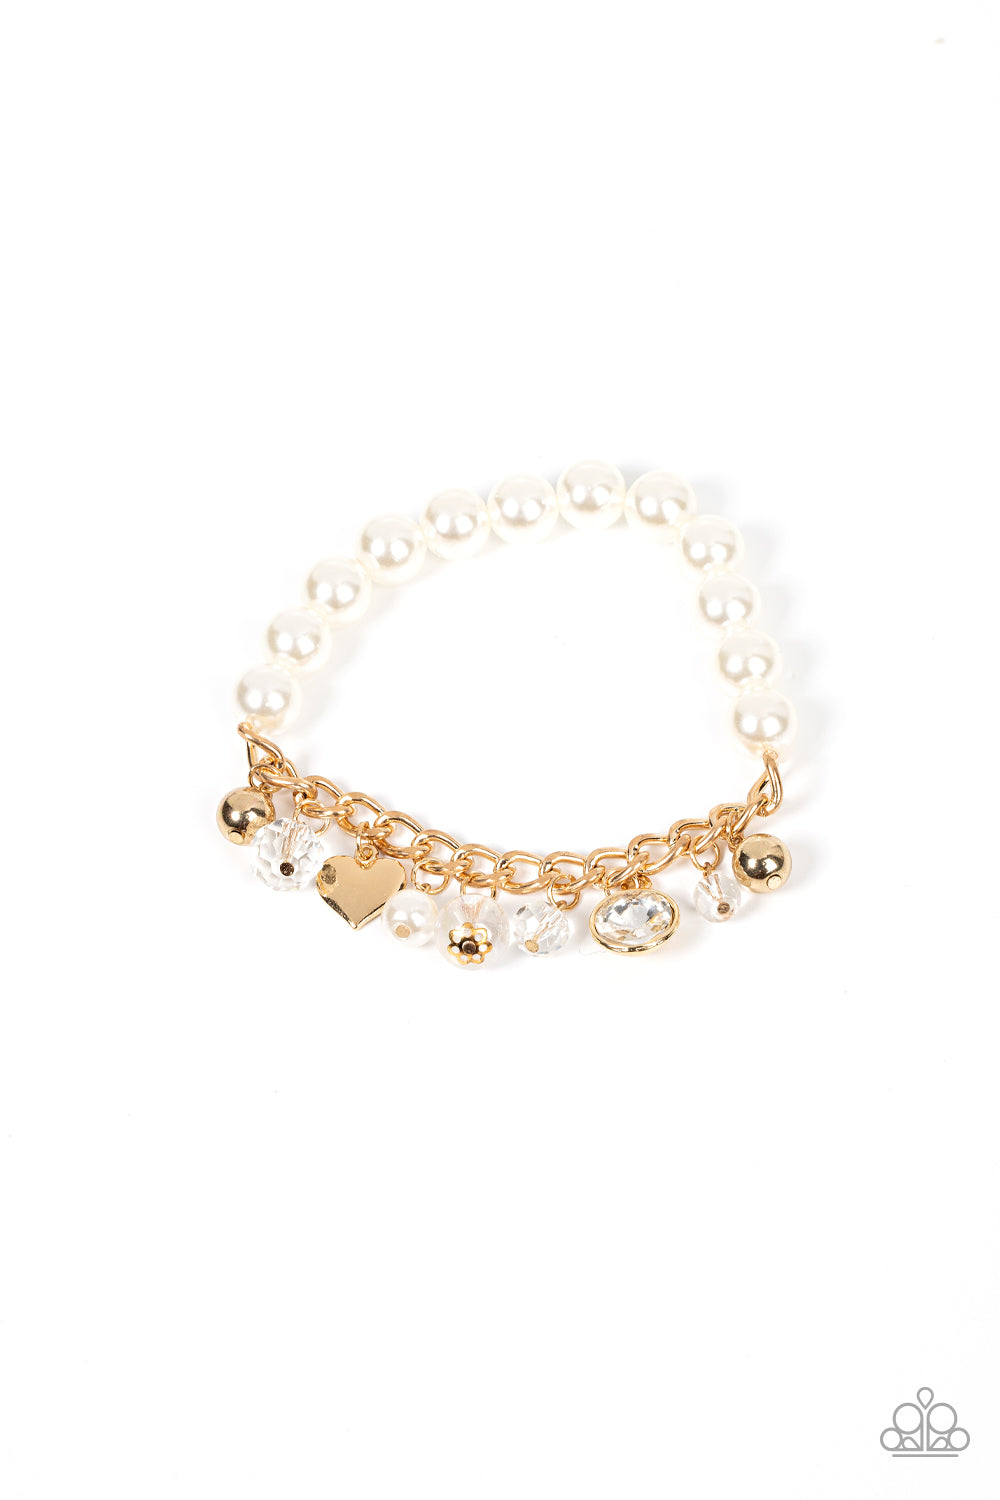 Adorningly Admirable - Gold bracelet